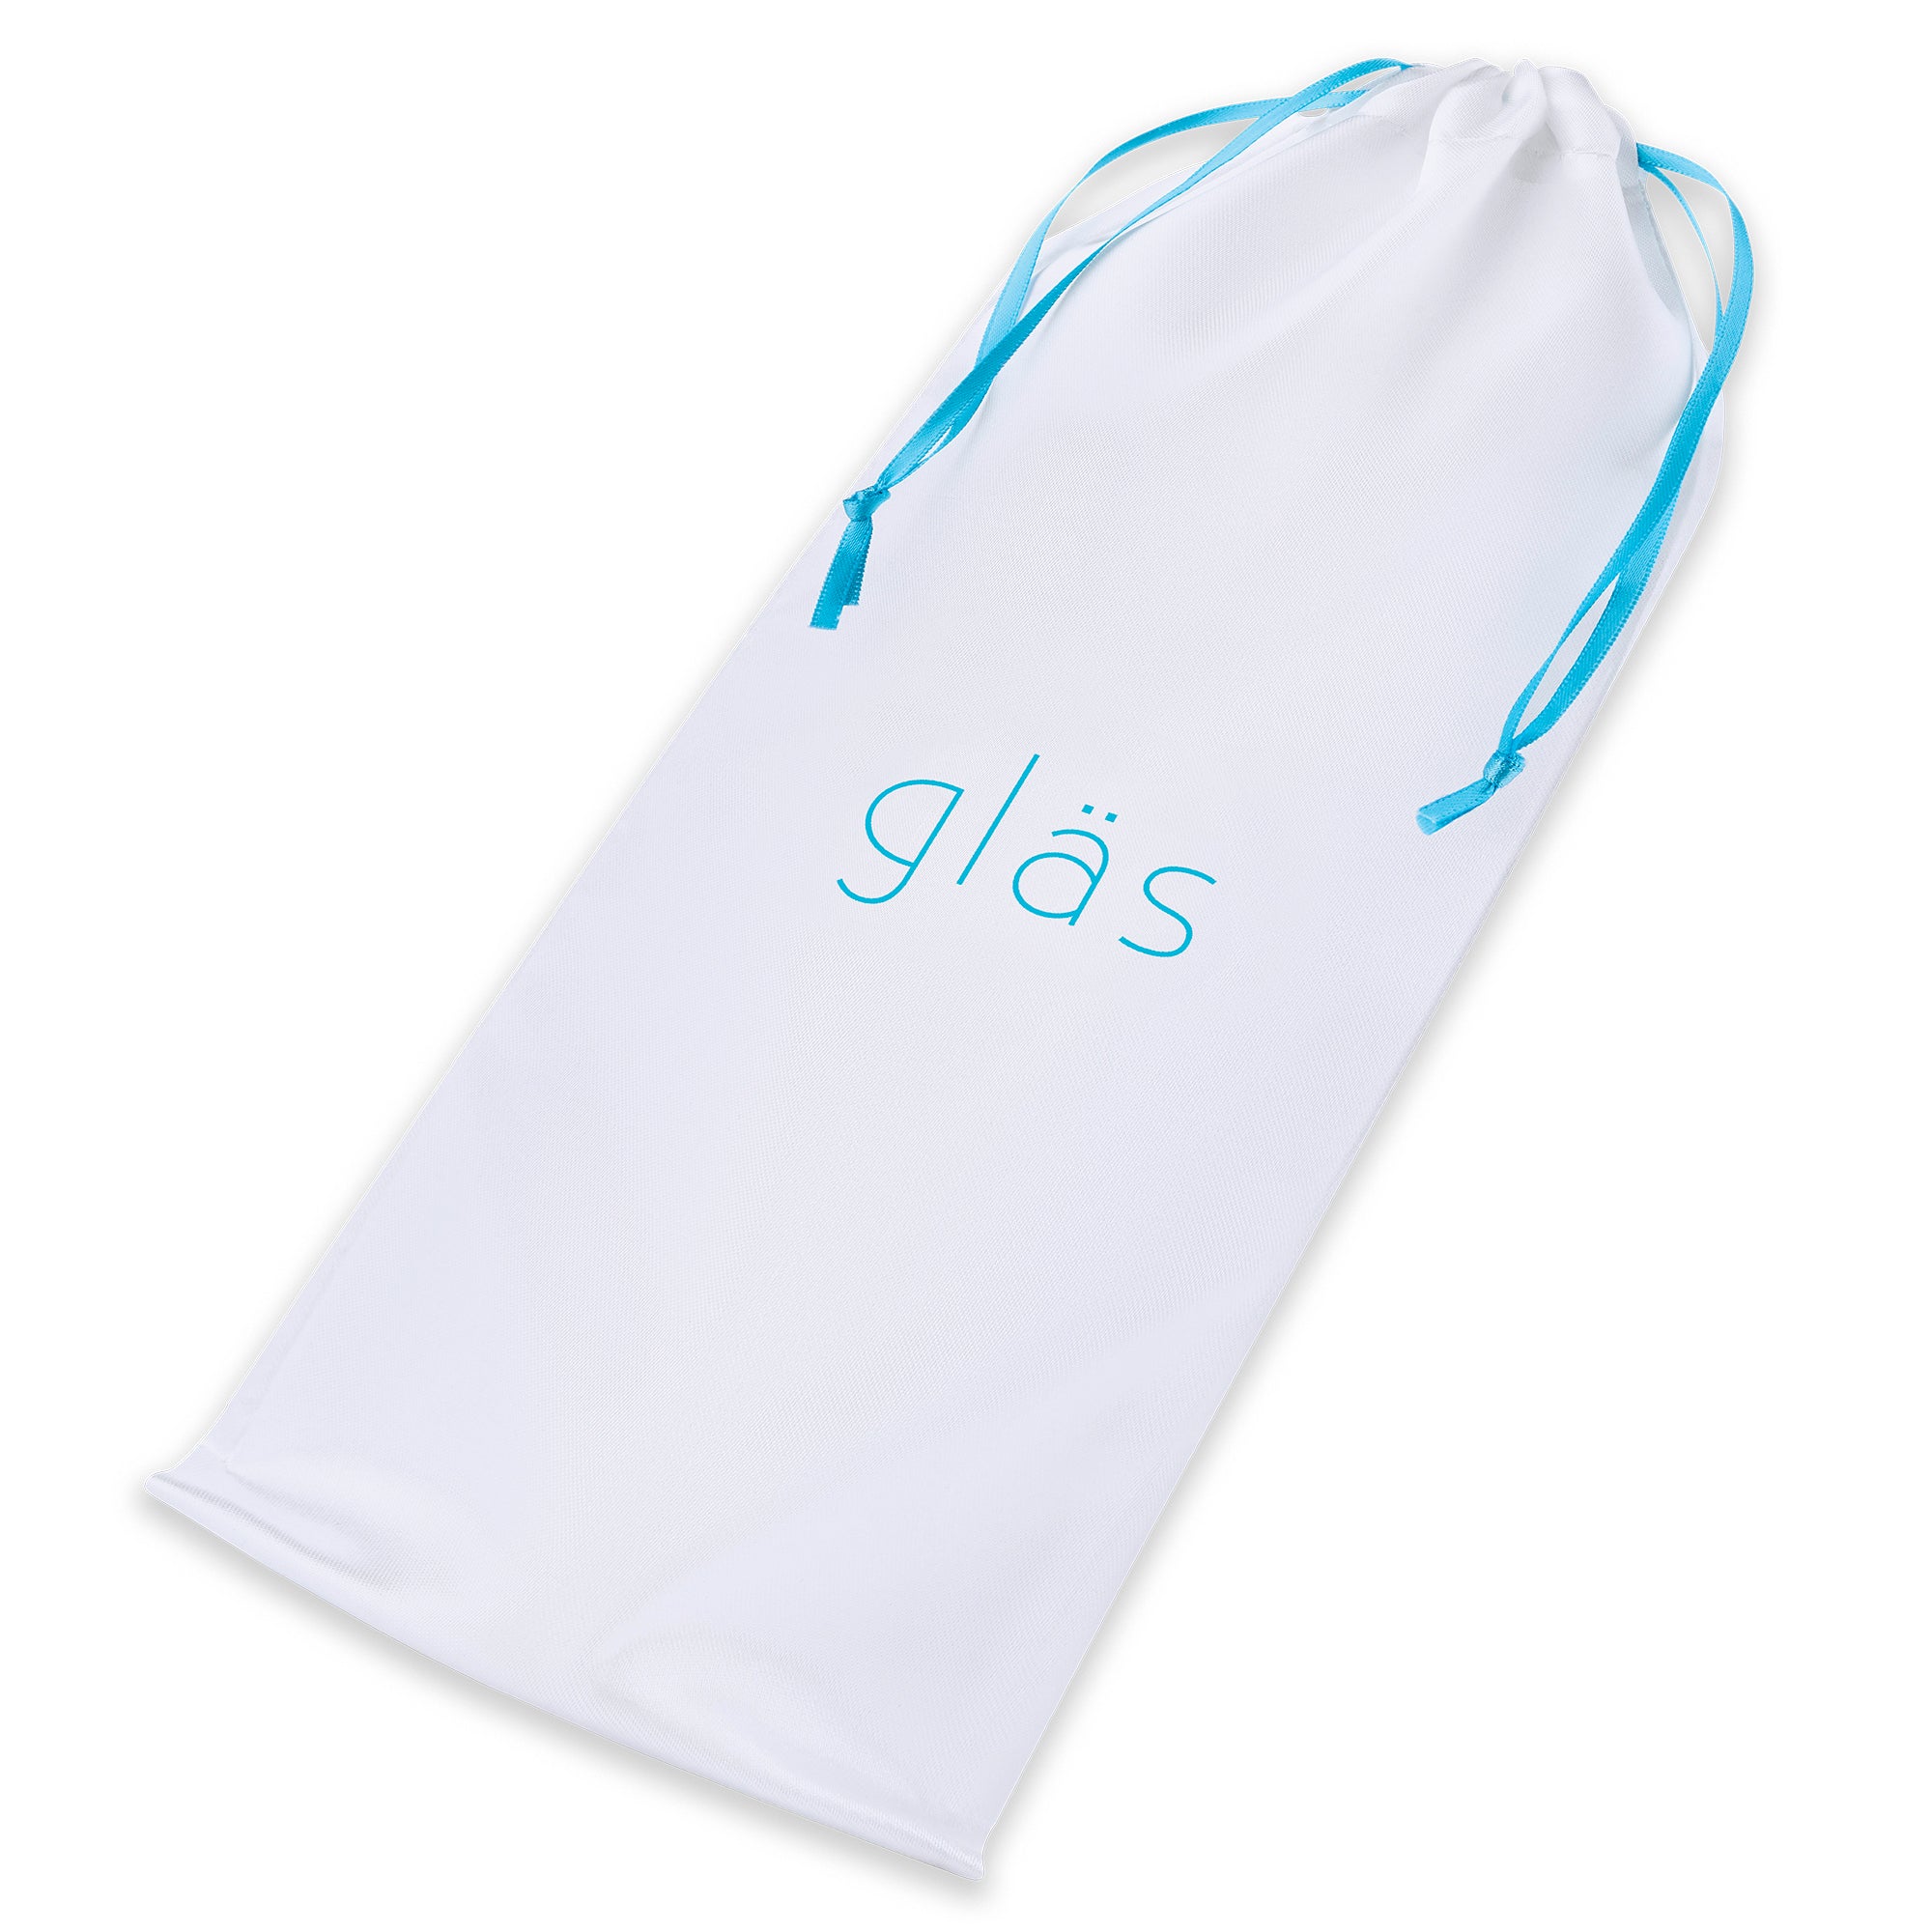 11" Double-sided Glass Dildo For G-Spot P-Spot Stimulation